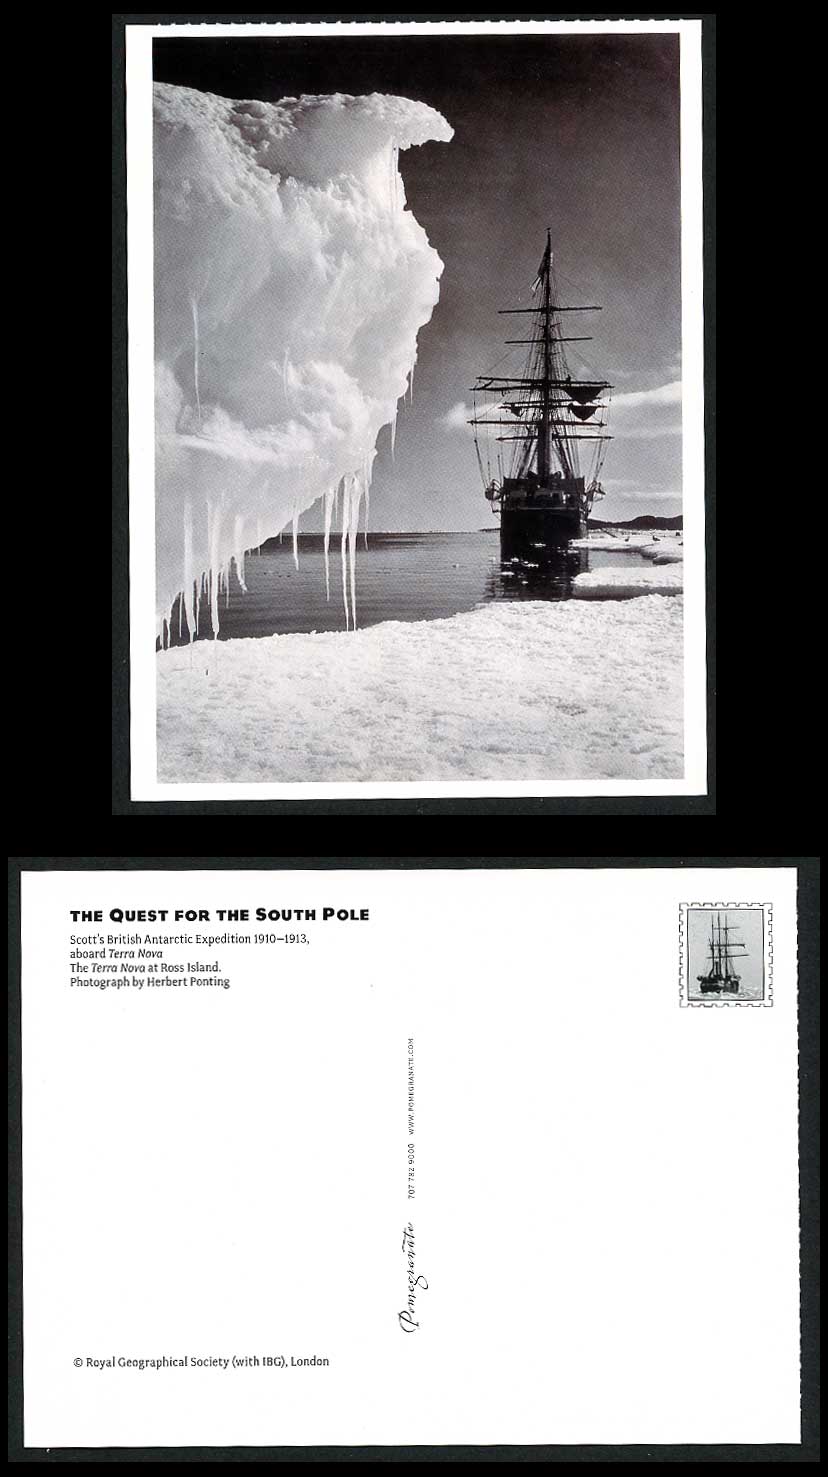 Scott's British Antarctic Expedition, aboard Terra Nova at Ross Island, Postcard